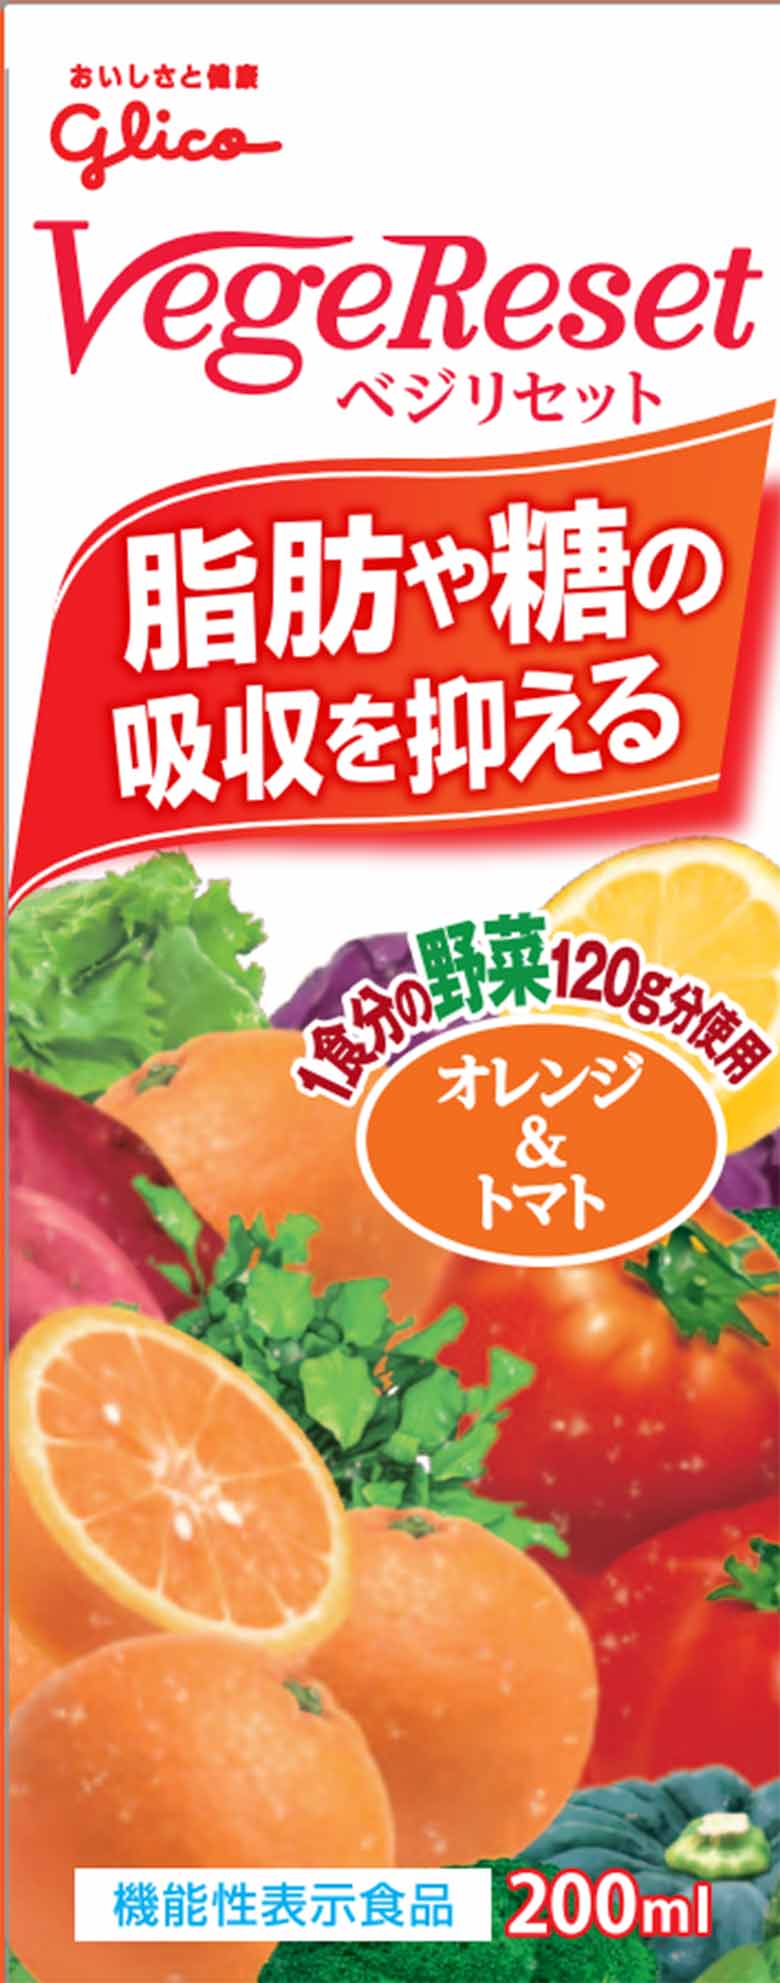 VegeReset[ベジリセット]オレンジ&(アンド)トマト